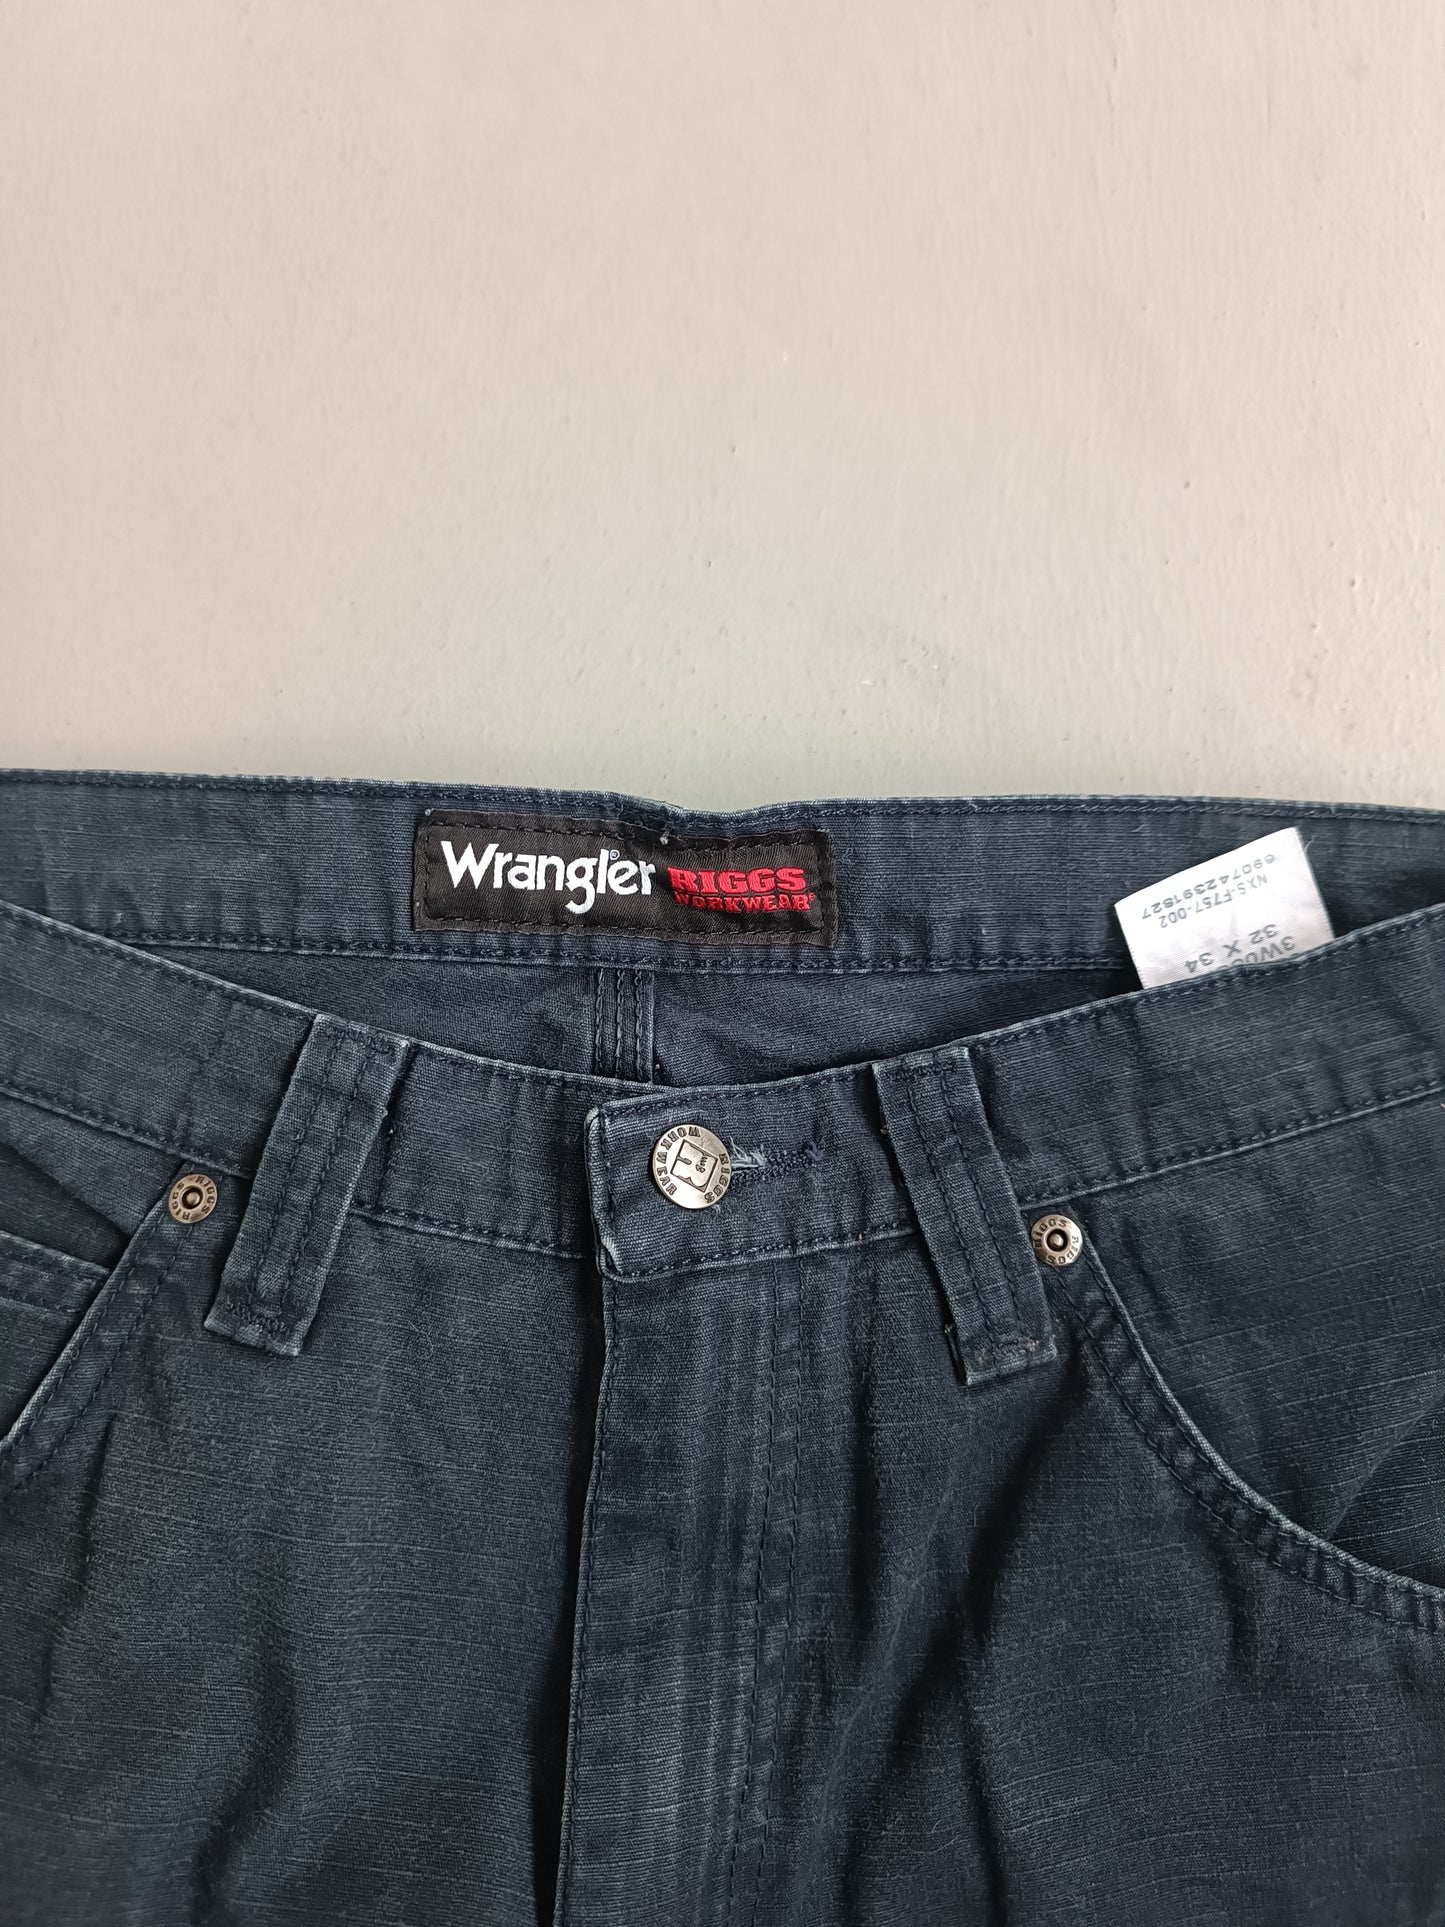 Wranglers Ripstop Cargo Pants - W32